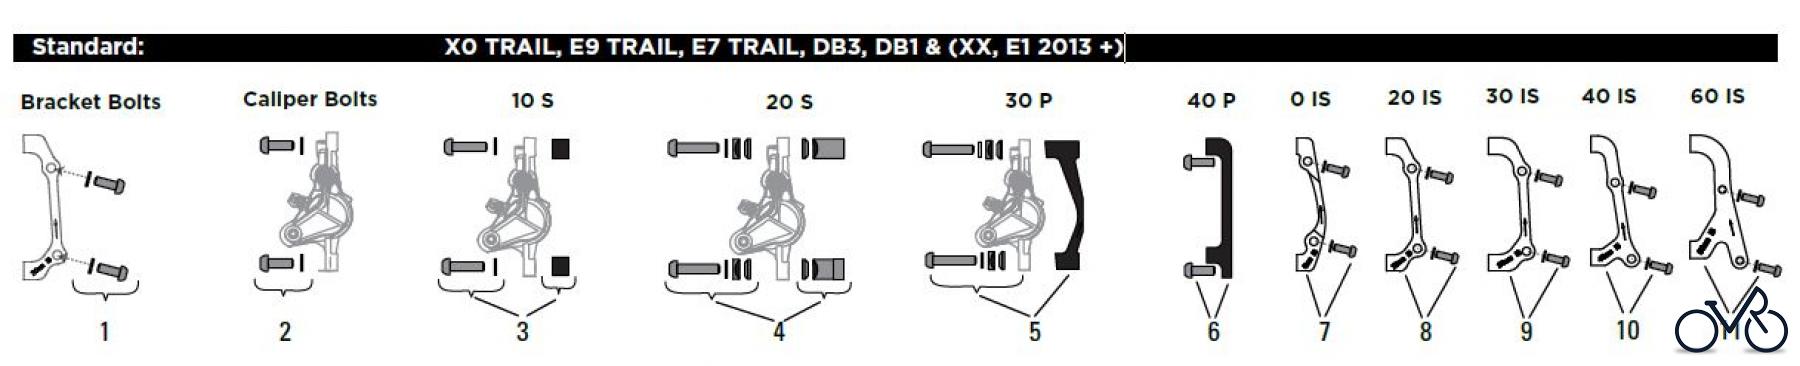  Sram avid BRACKETS & HARDWARE MOUNTING BRACKETS & TOWERS/SPACERS / HARDWARE Standard:X0 TRAIL, E9 TRAIL, E7 TRAIL, DB3, DB1 & (XX, E1 2013 +)